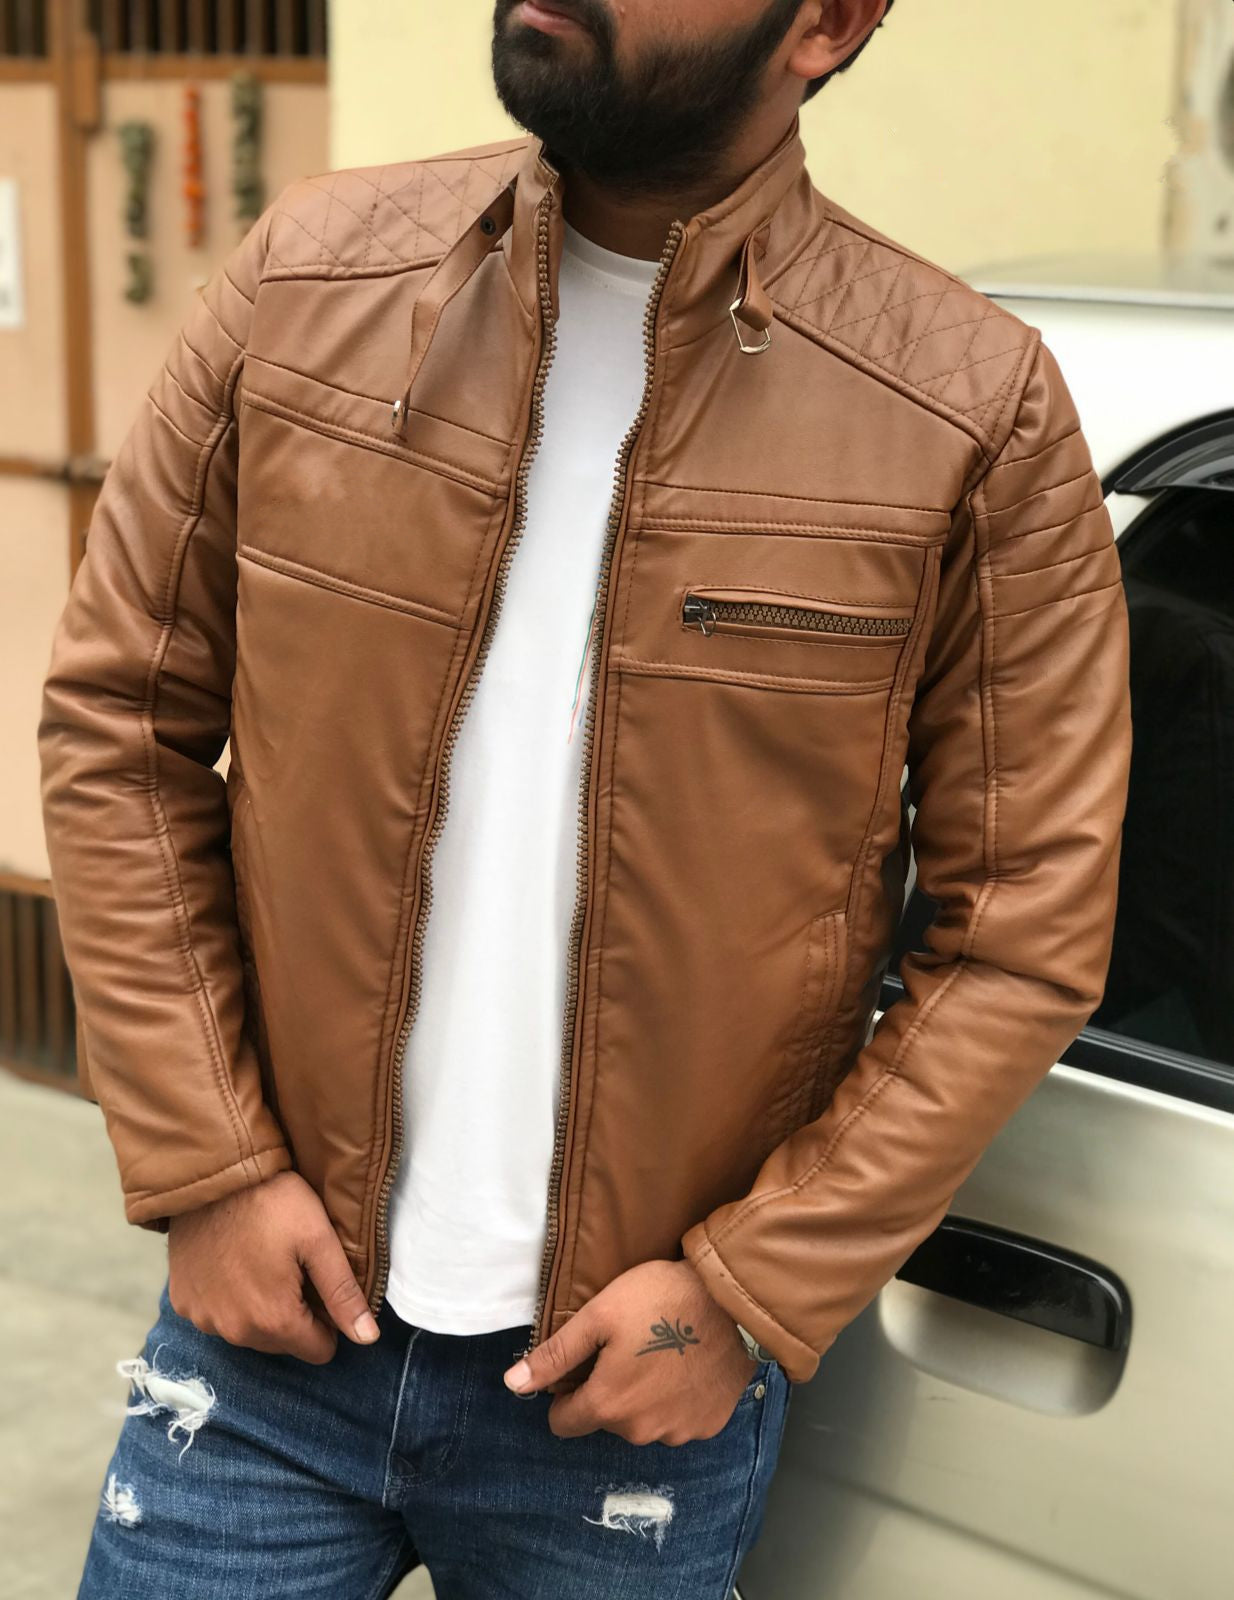 Men’s Winter Leather Jacket With Warm Furr Inside - Camel